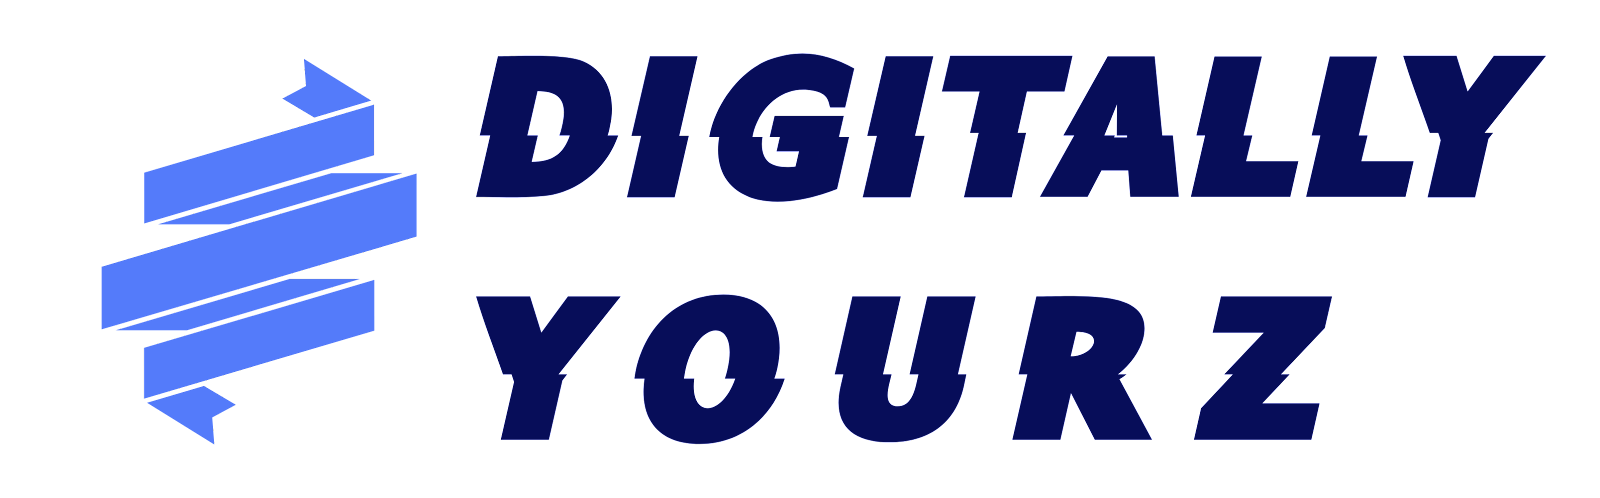 Digitally Yourz